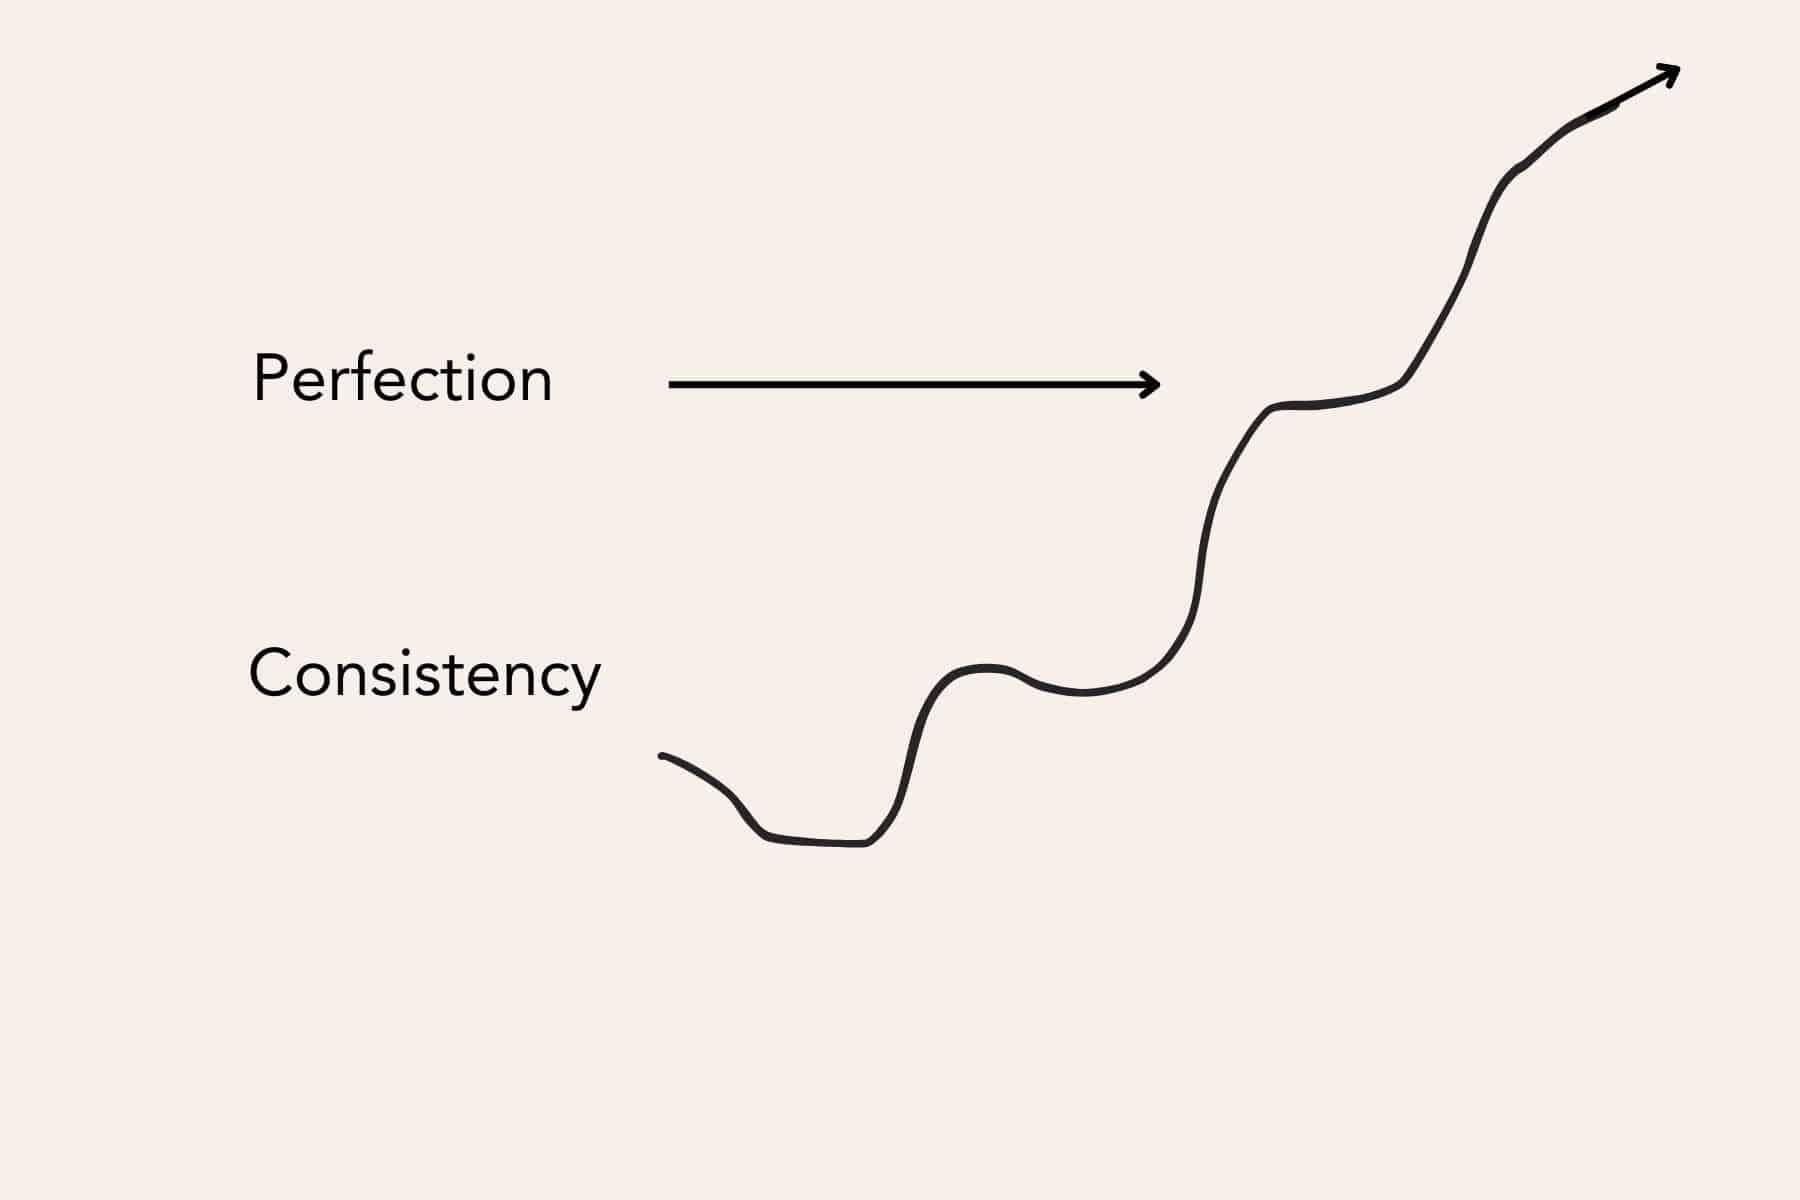 Consistency breeds progress, perfectionism inhibits progress